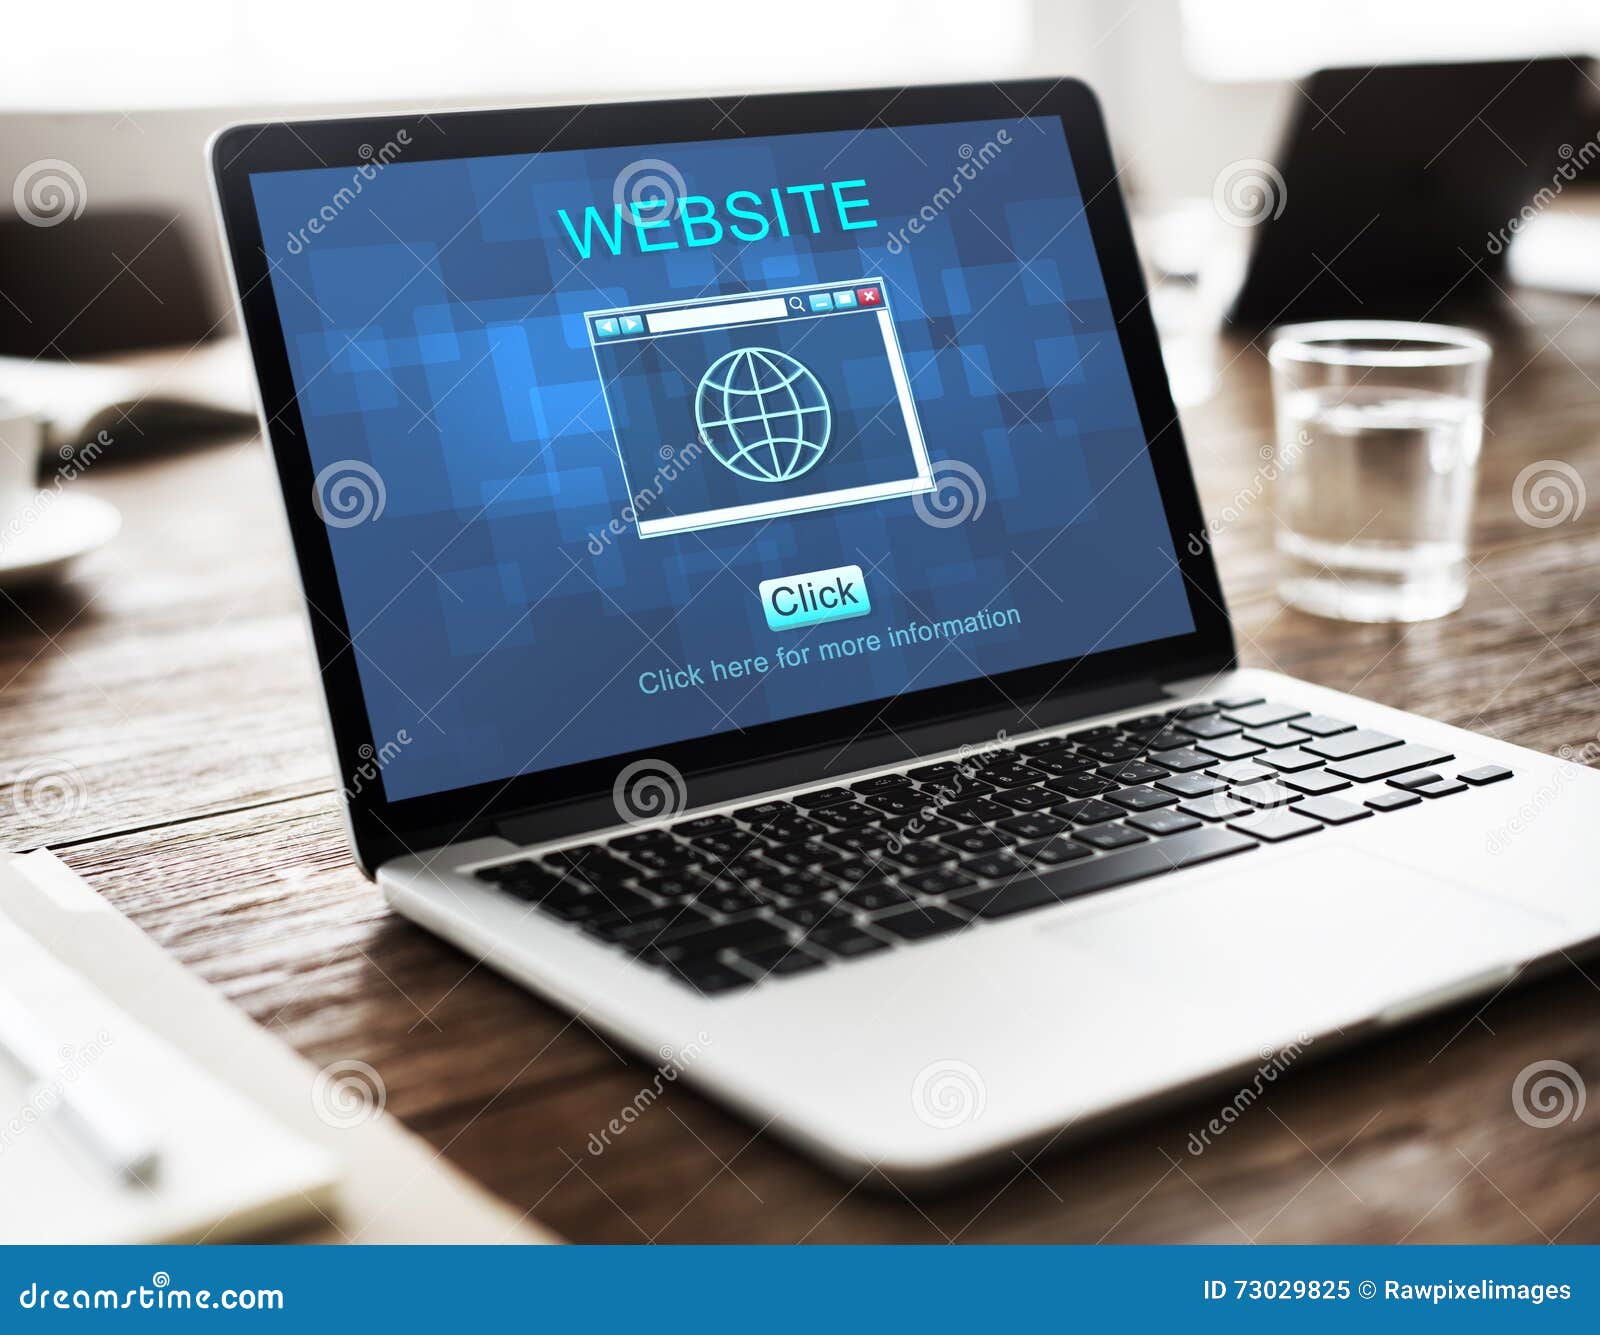 seo online website web hosting technology concept